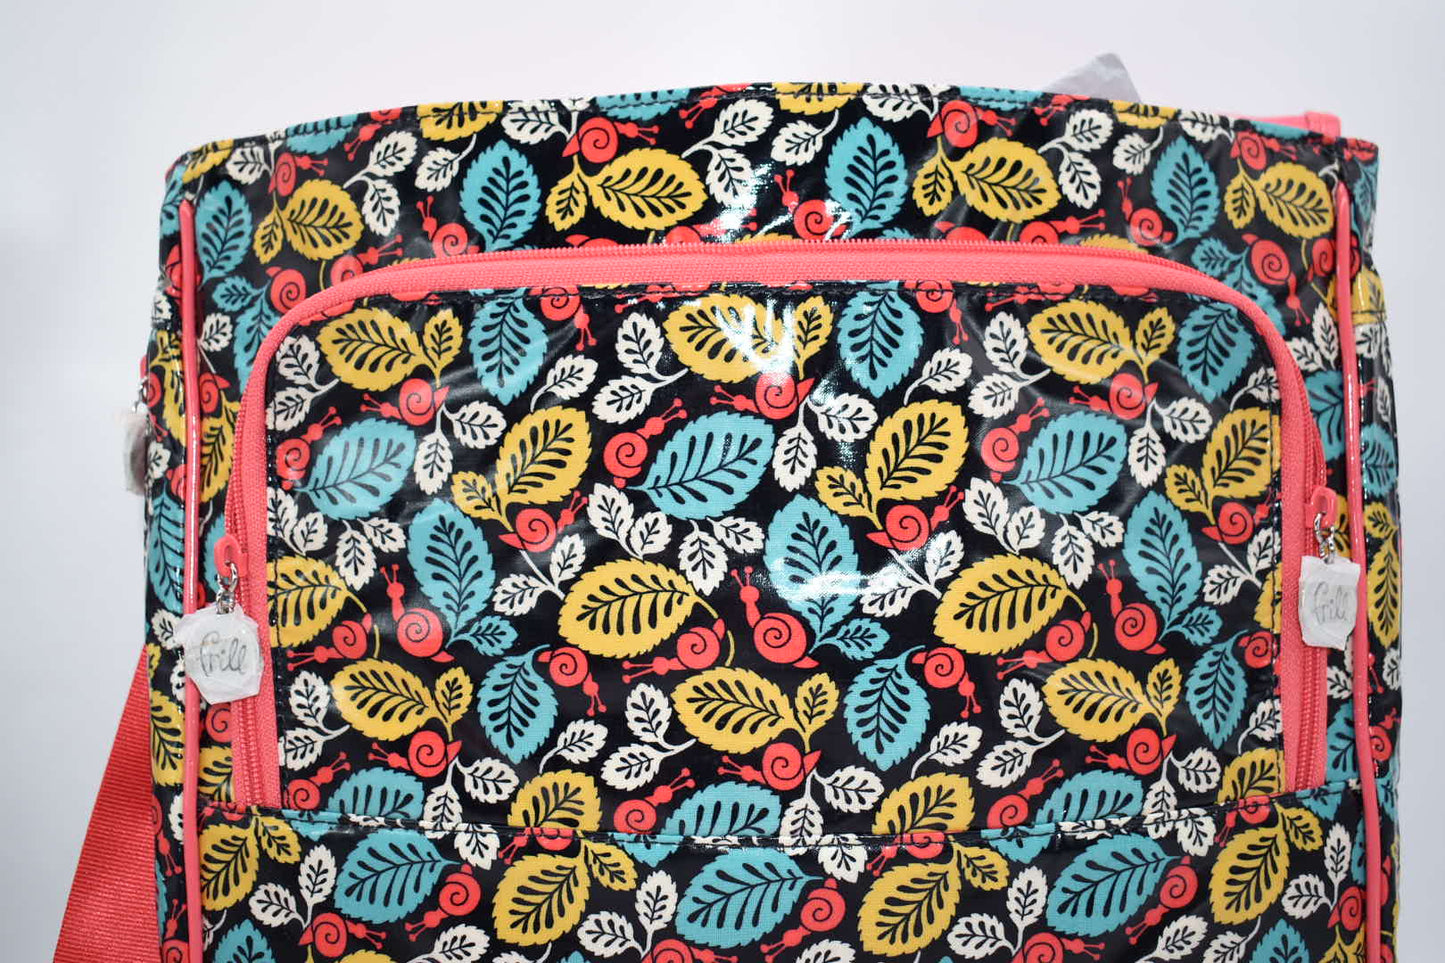 Vera Bradley Frill Messenger Bag in "Happy Snails" Pattern